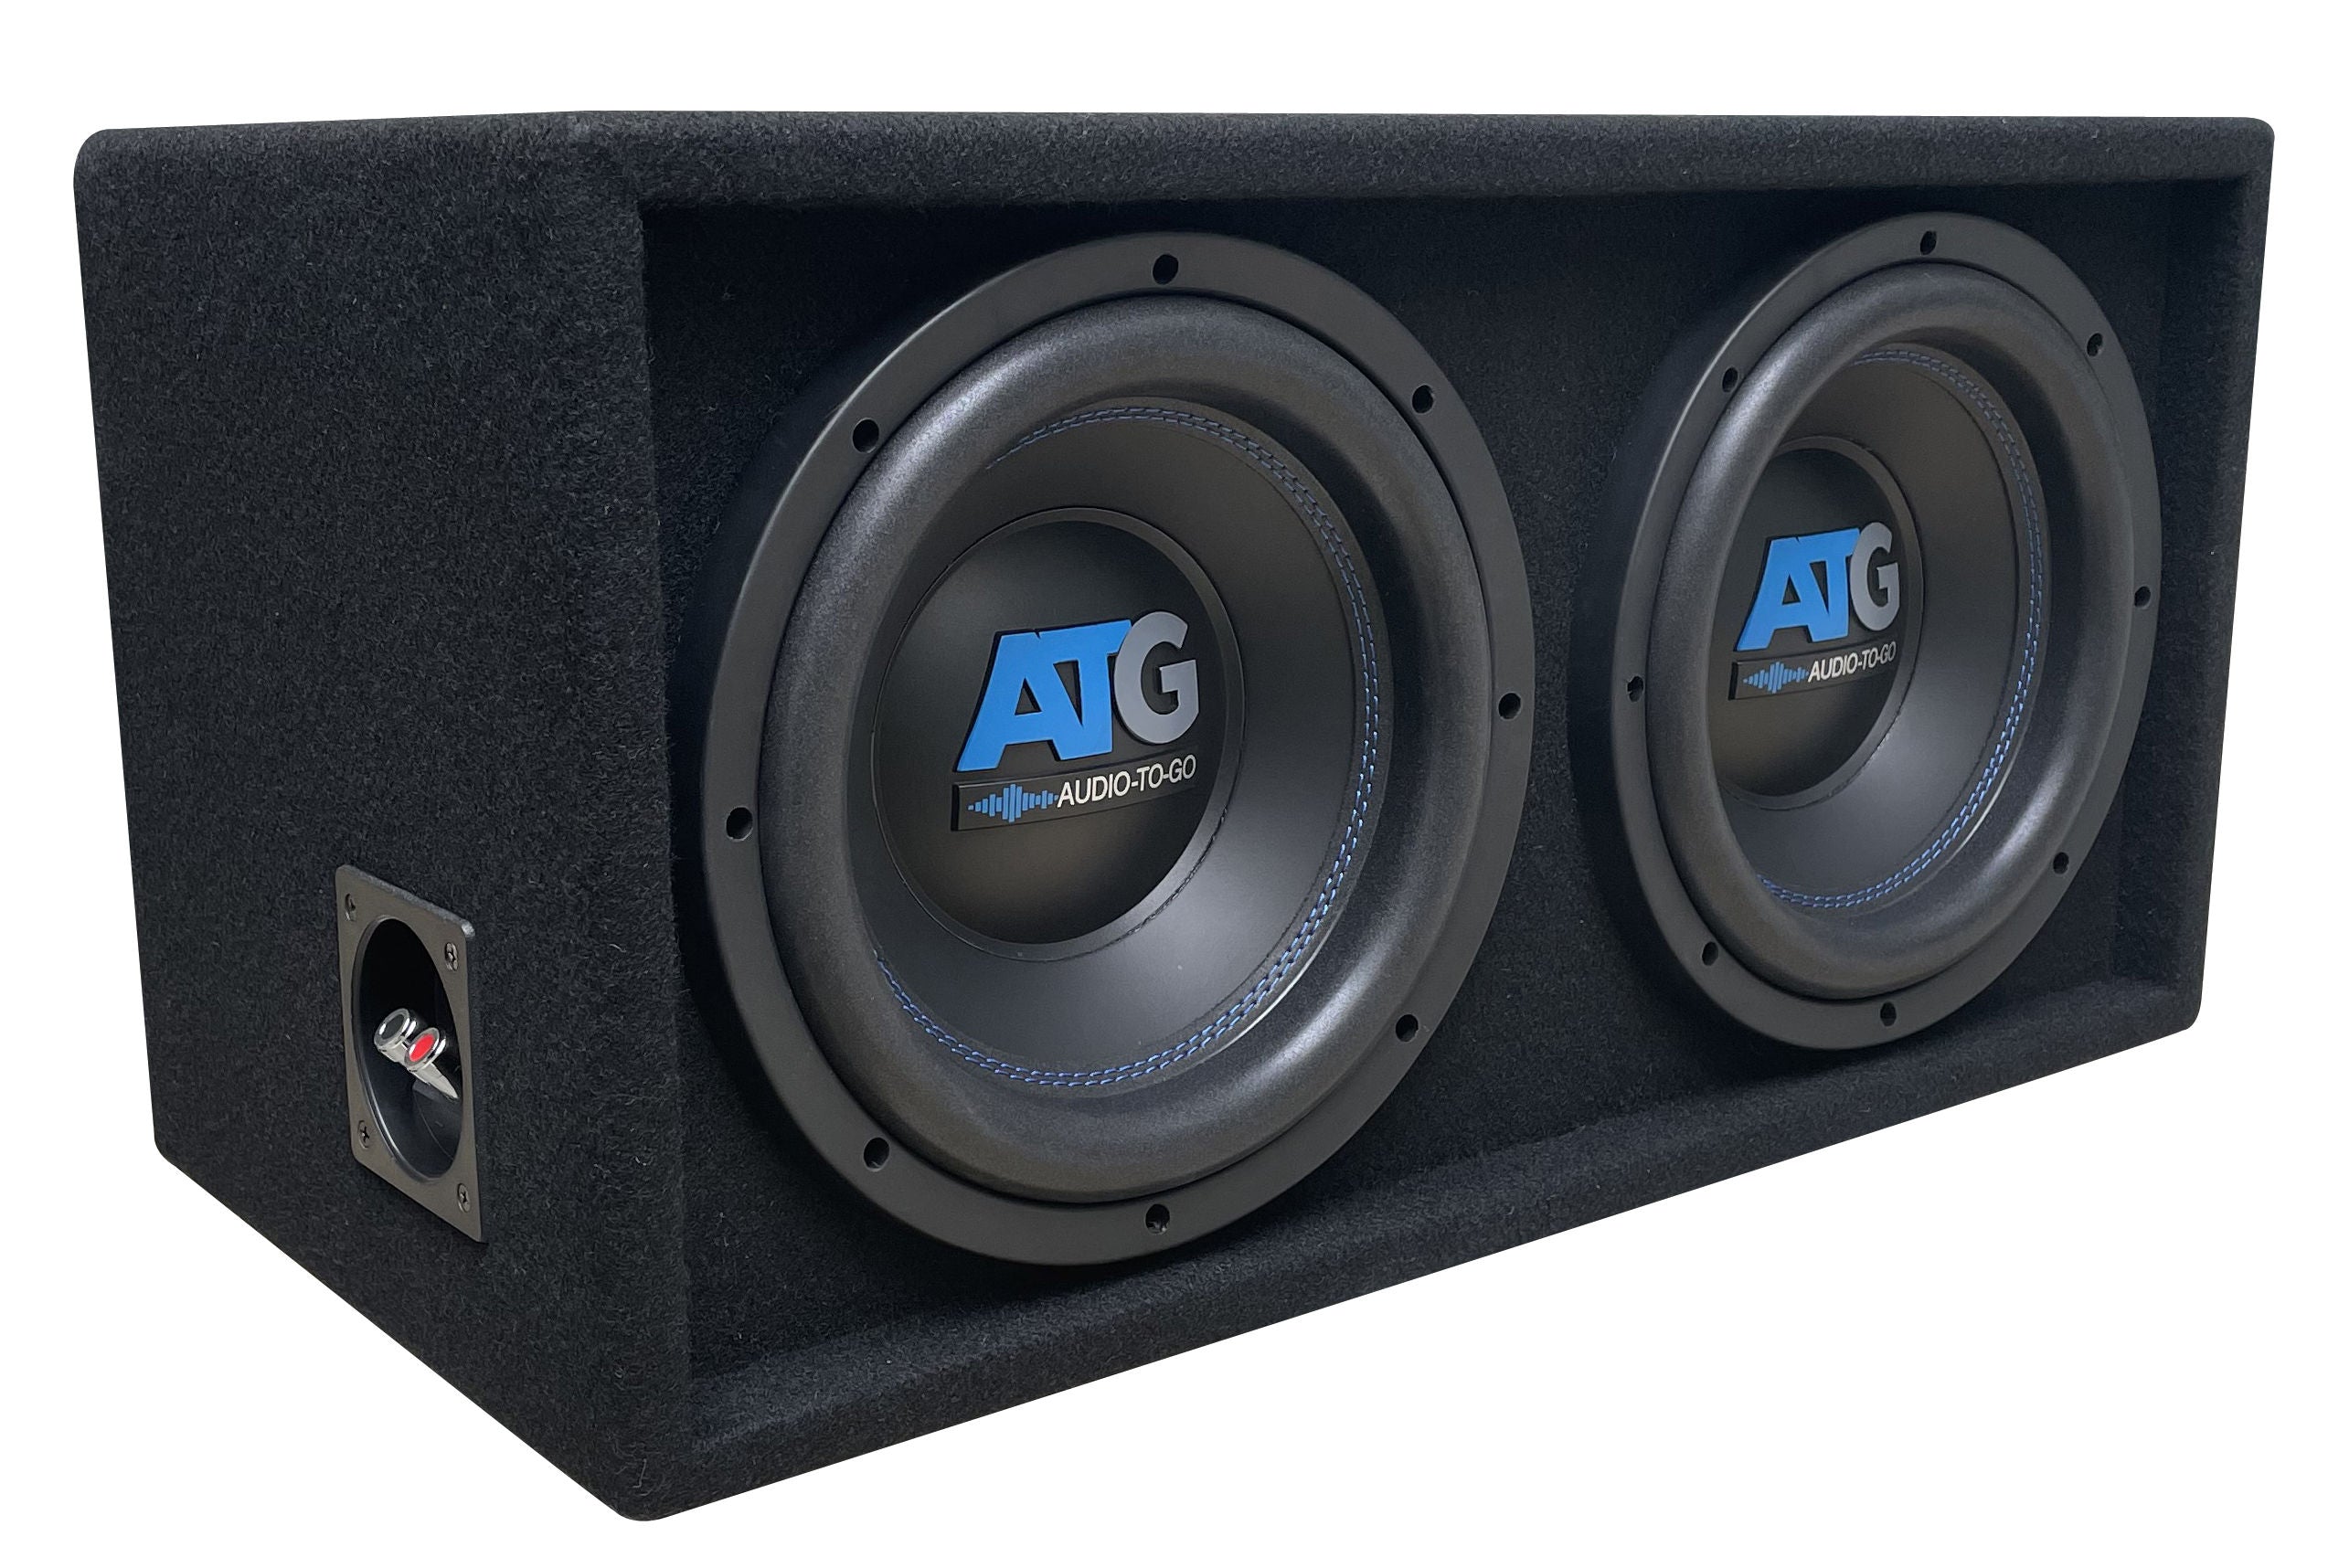 ATG ATG212LBX - ATG Audio Dual 12" Loaded Slot Ported Enclosure